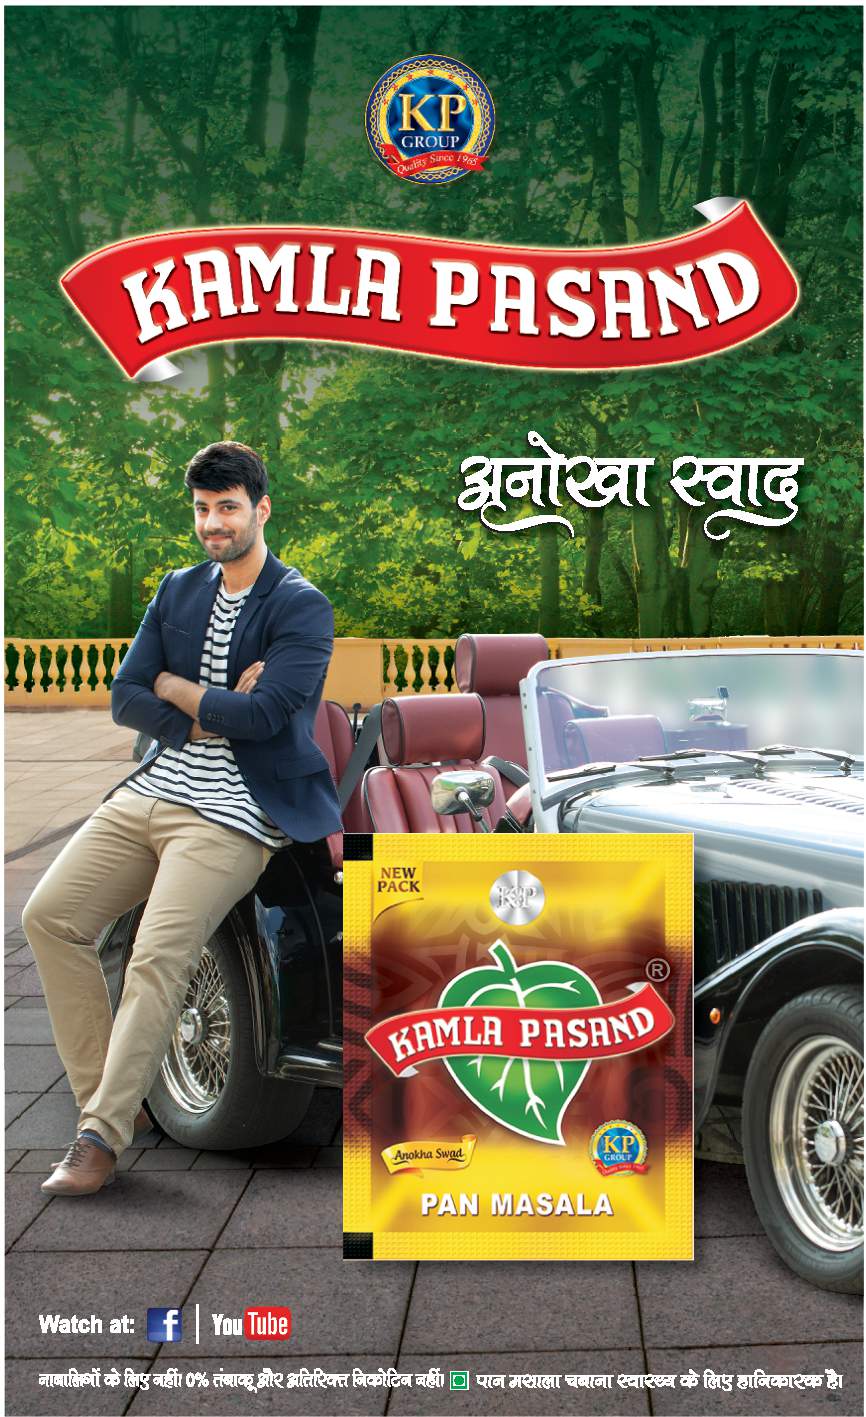 Kamla Pasand Pan Masala Ad Dainik Jagran Dehi Advert Gallery